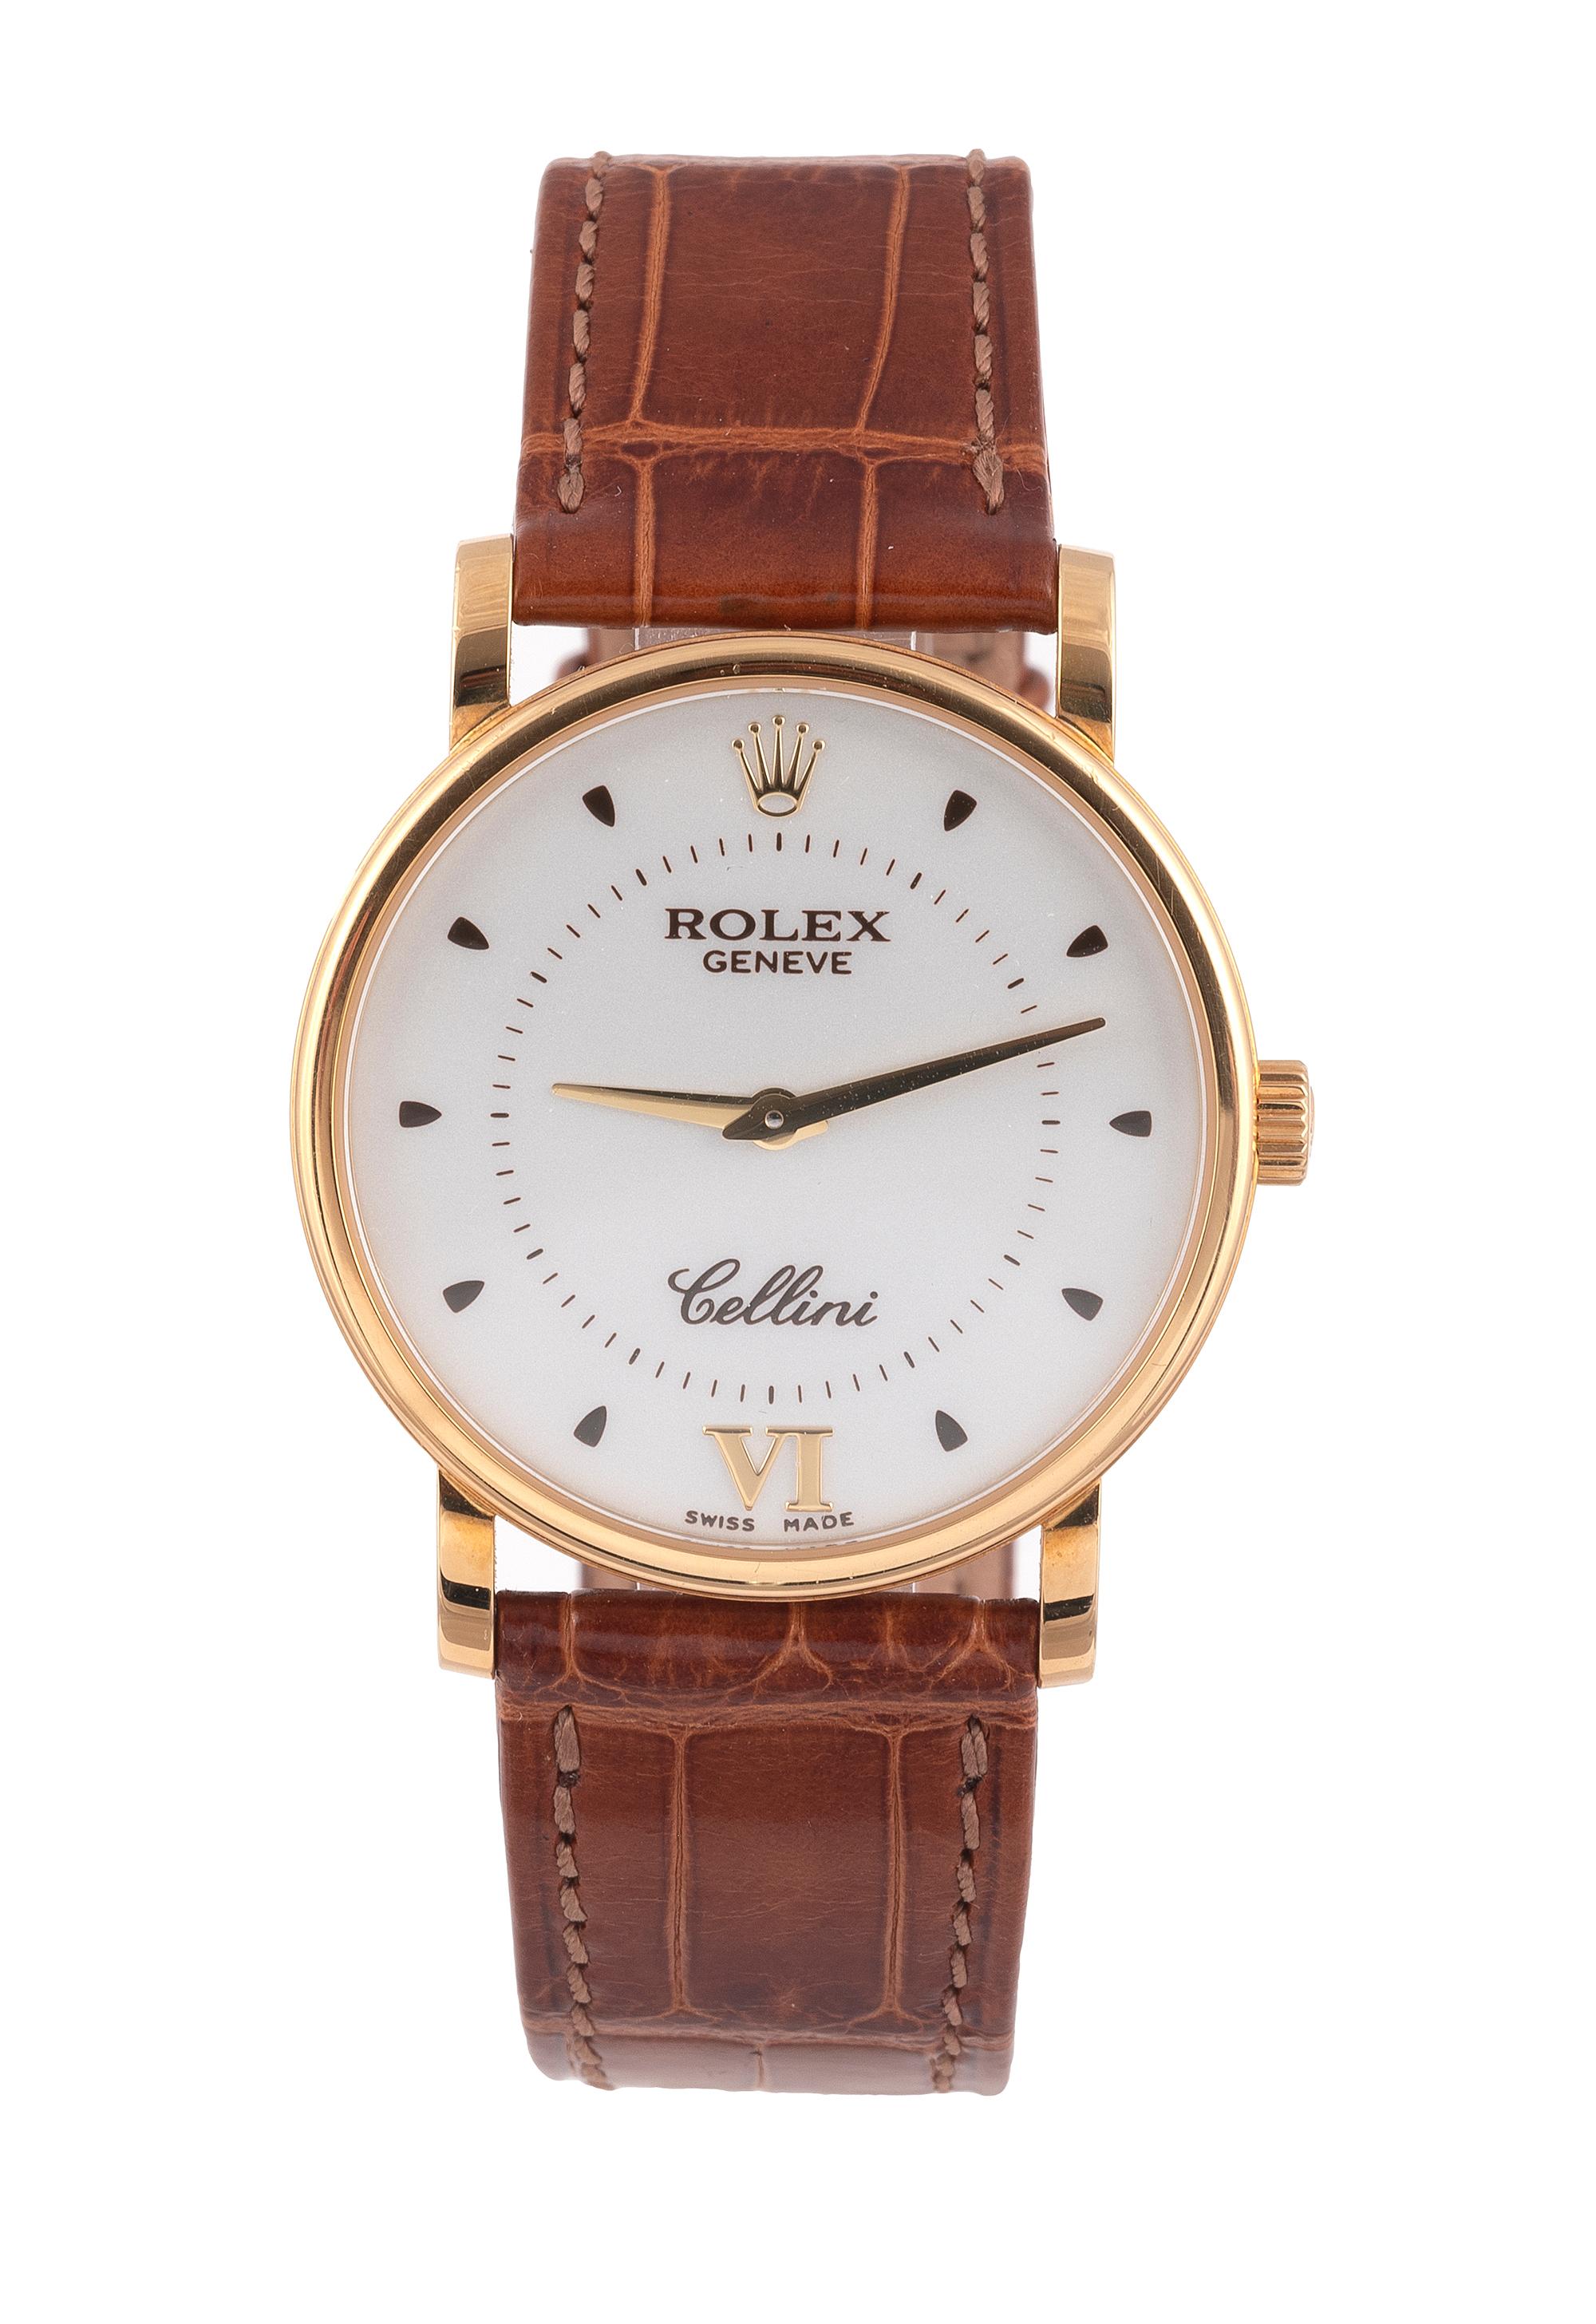 Contemporary Rolex Ref. 5115 Cellini 18kt Yellow Gold Wristwatch